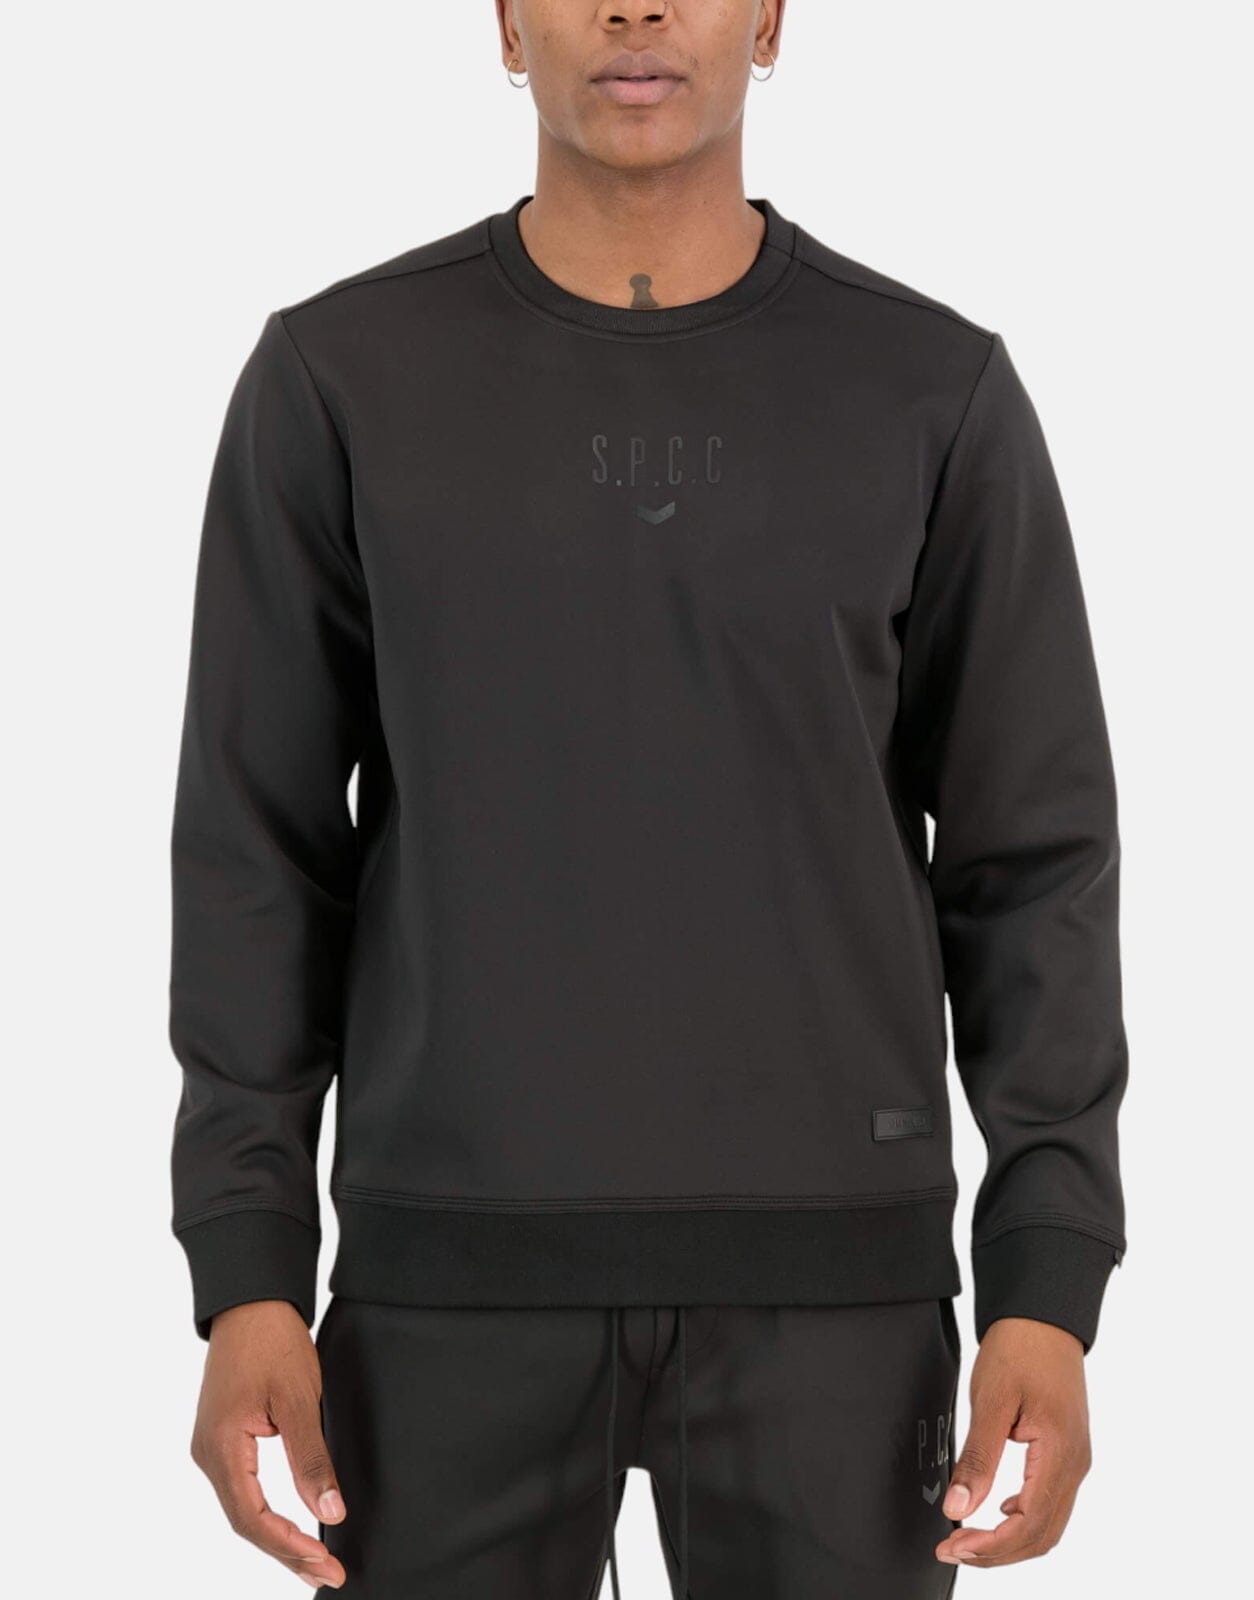 SPCC Sark Black Sweatshirt - Subwear